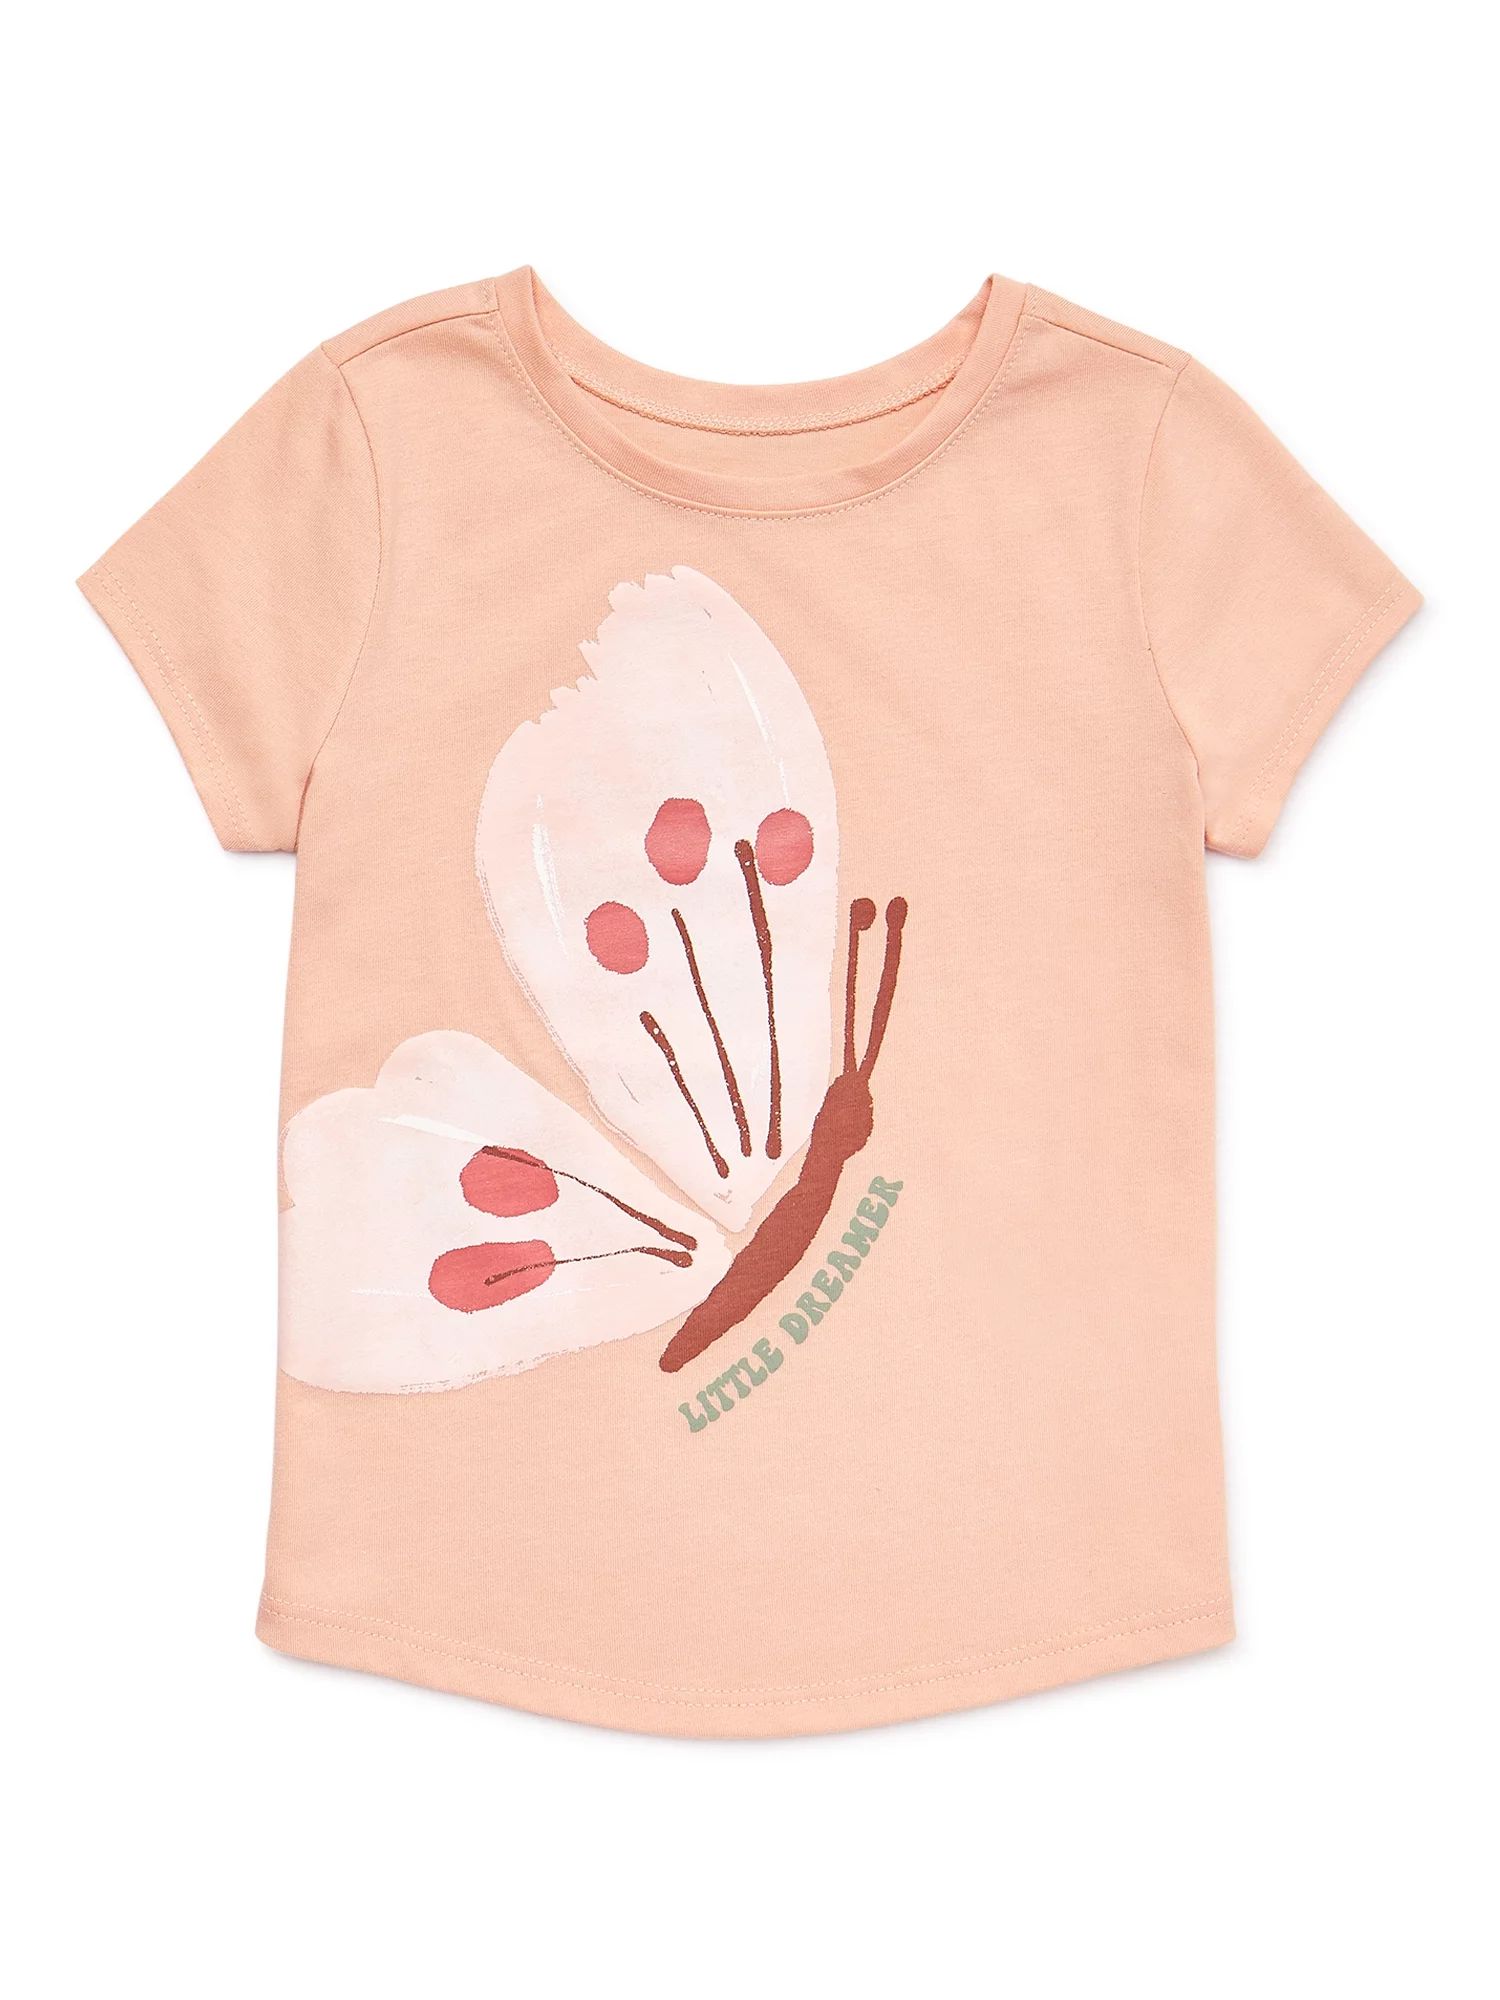 Garanimals Toddler Girl Short Sleeve Graphic Tee, Sizes 12M-5T | Walmart (US)